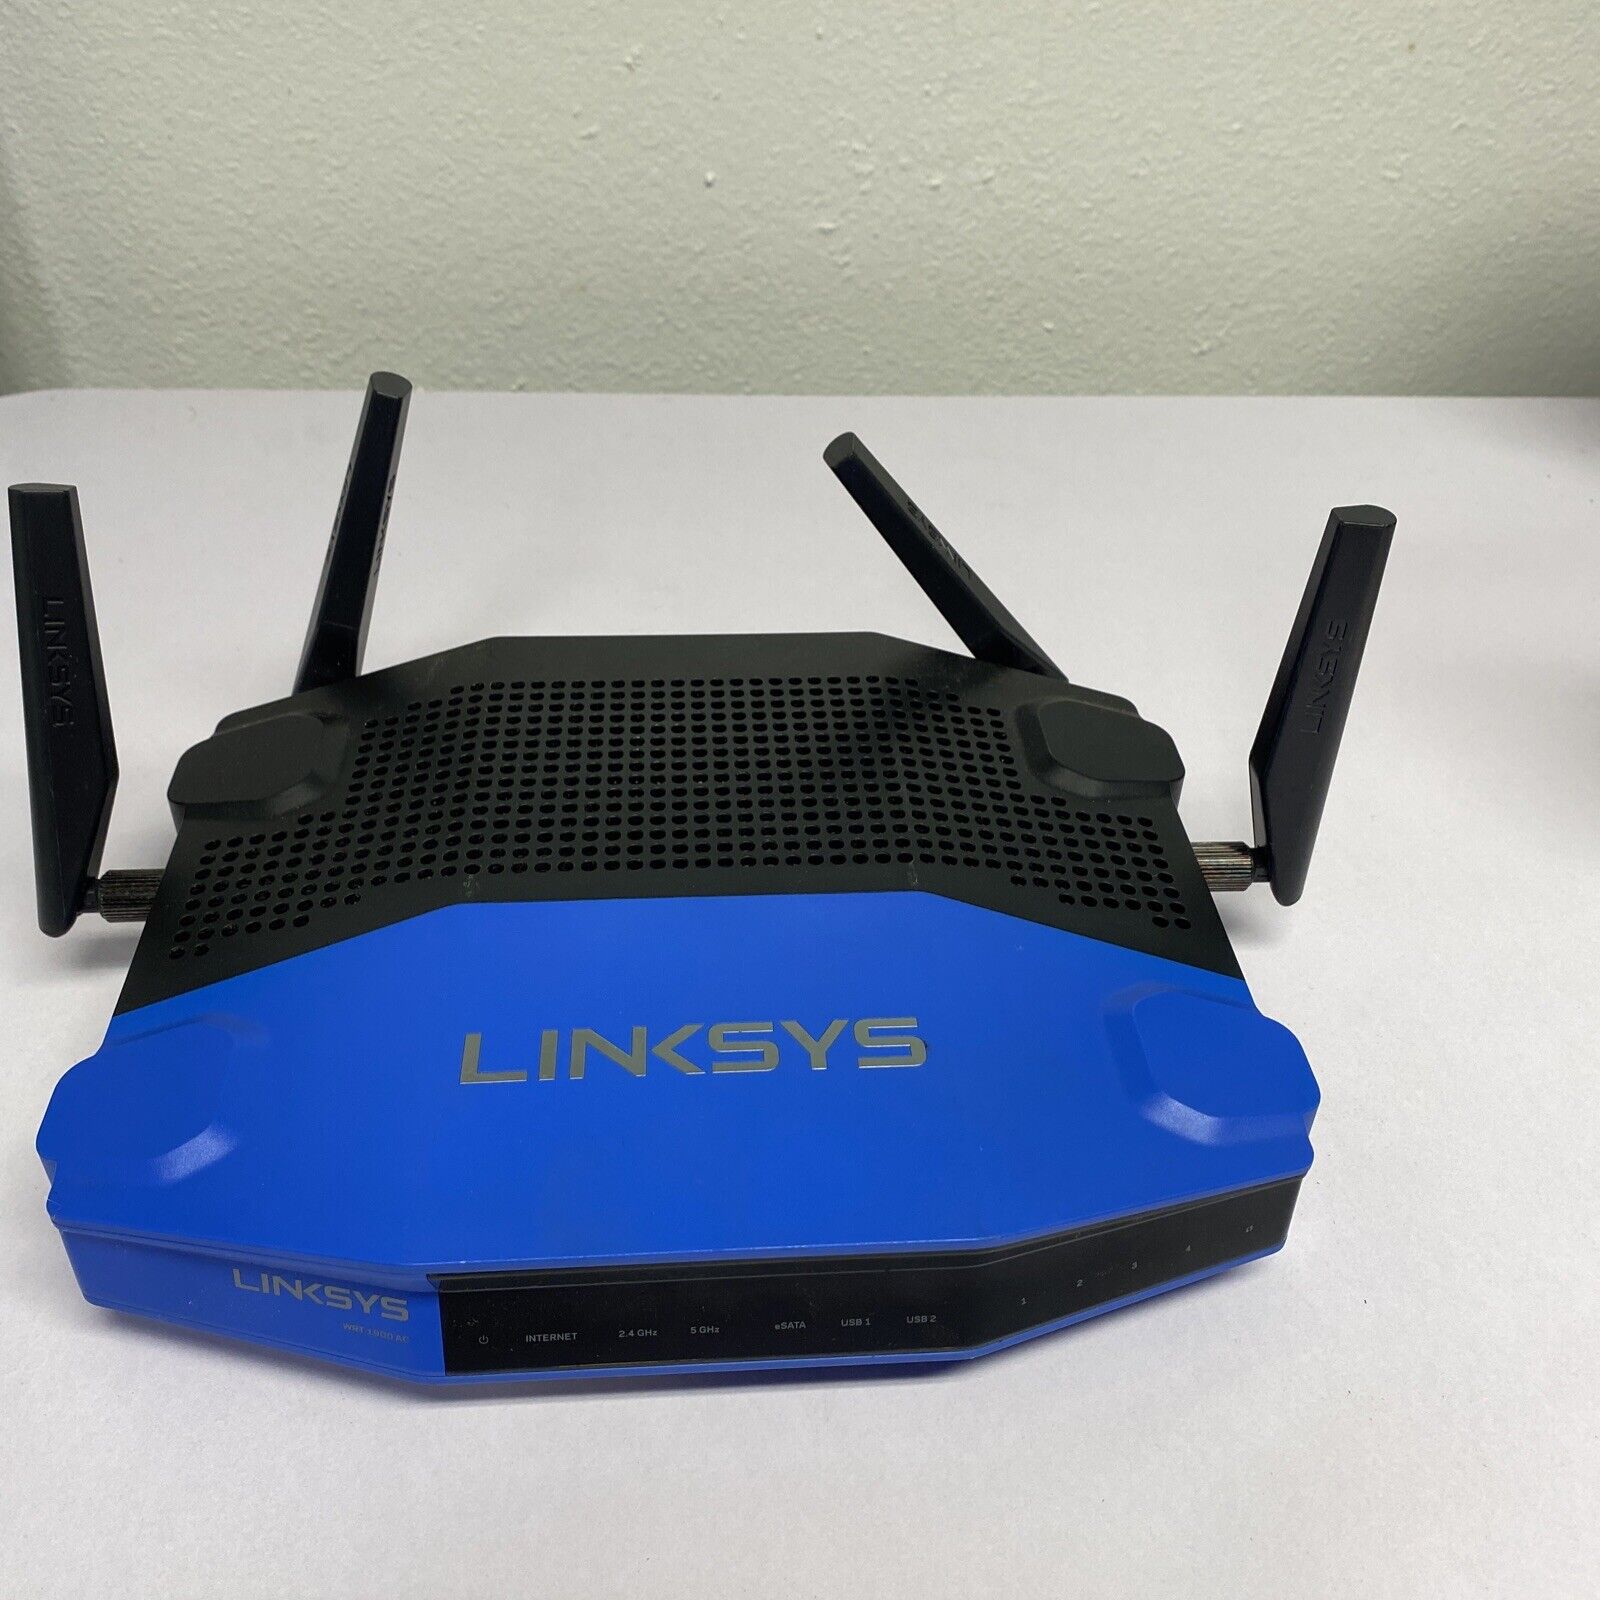 LINKSYS - WRT1900AC V2 - AC1900 Wireless Dual-Band Gigabit WiFi Router